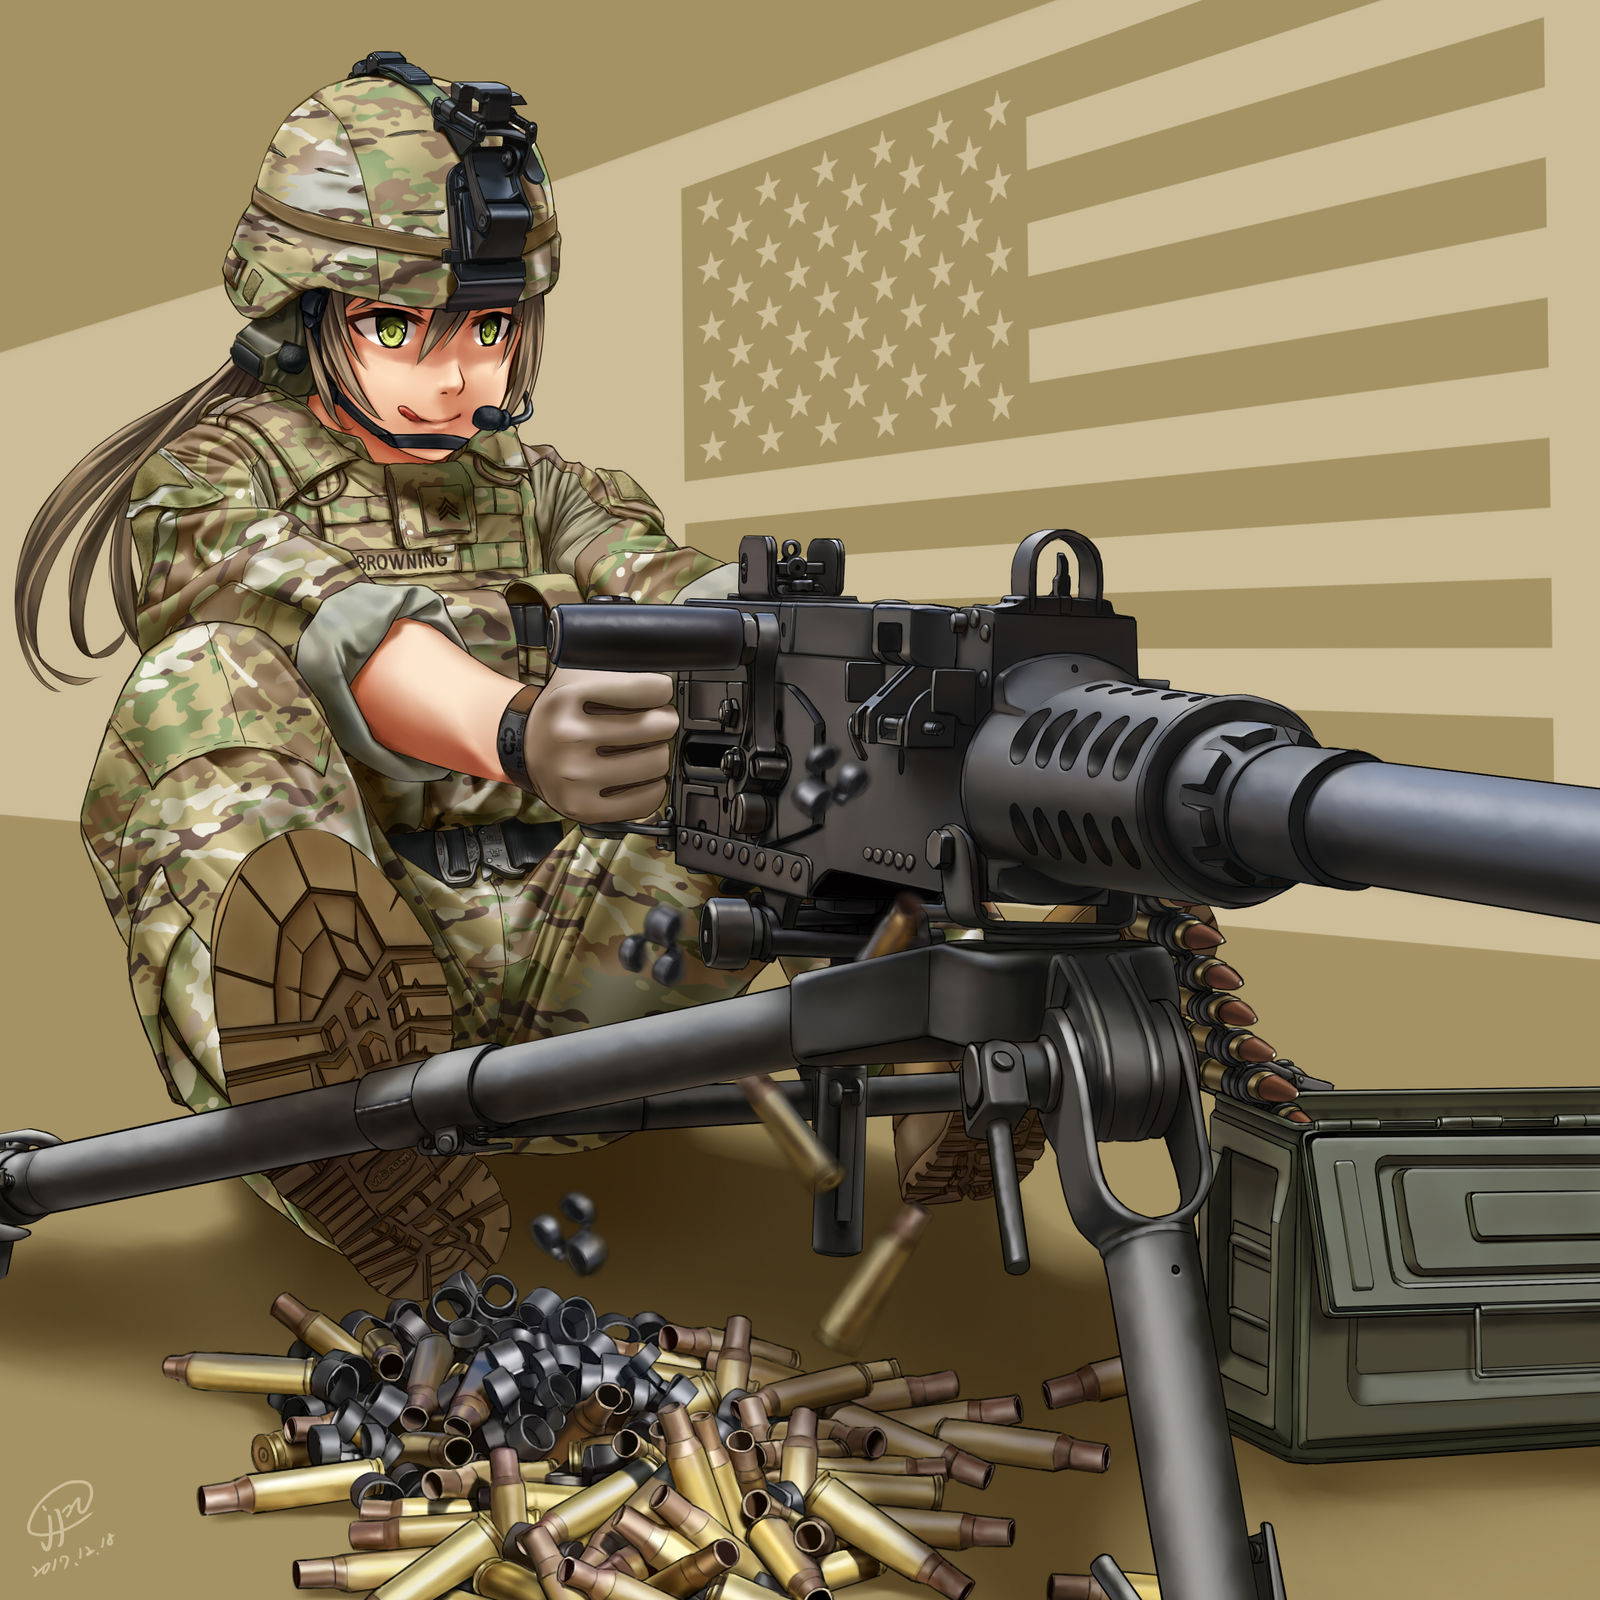 U.S. ARMY插画图片壁纸